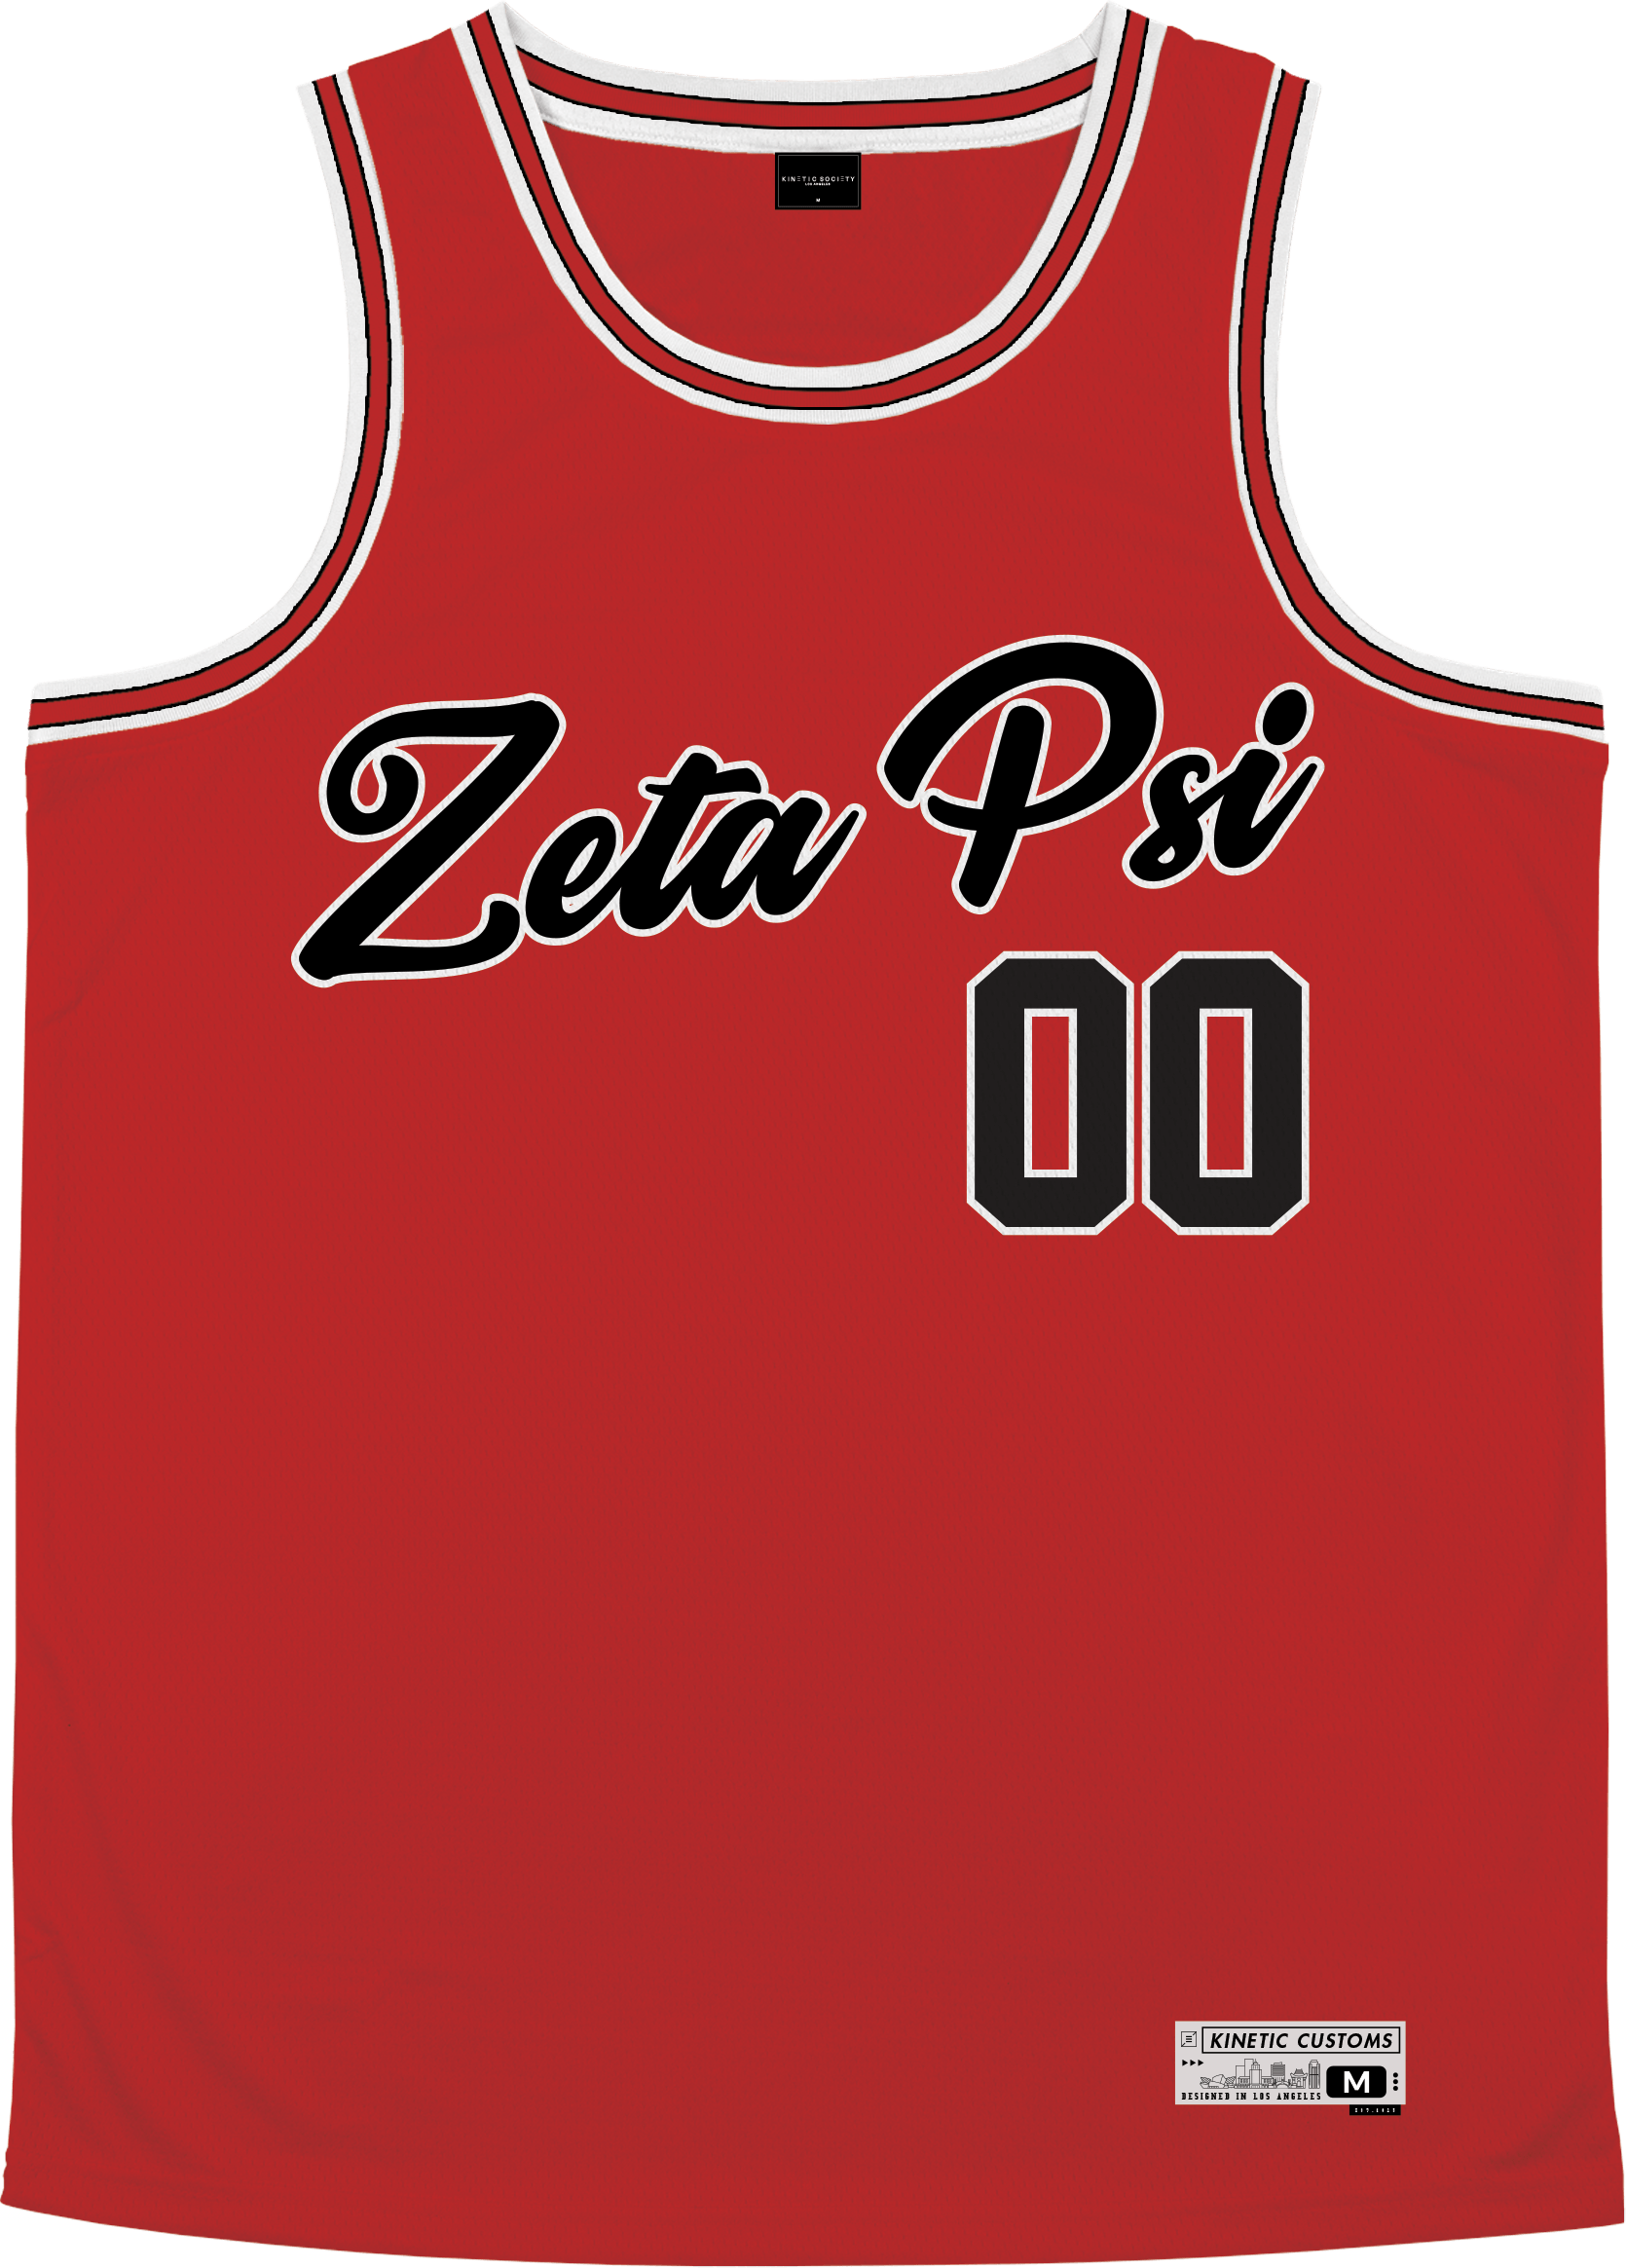 Zeta Psi - Big Red Basketball Jersey Premium Basketball Kinetic Society LLC 